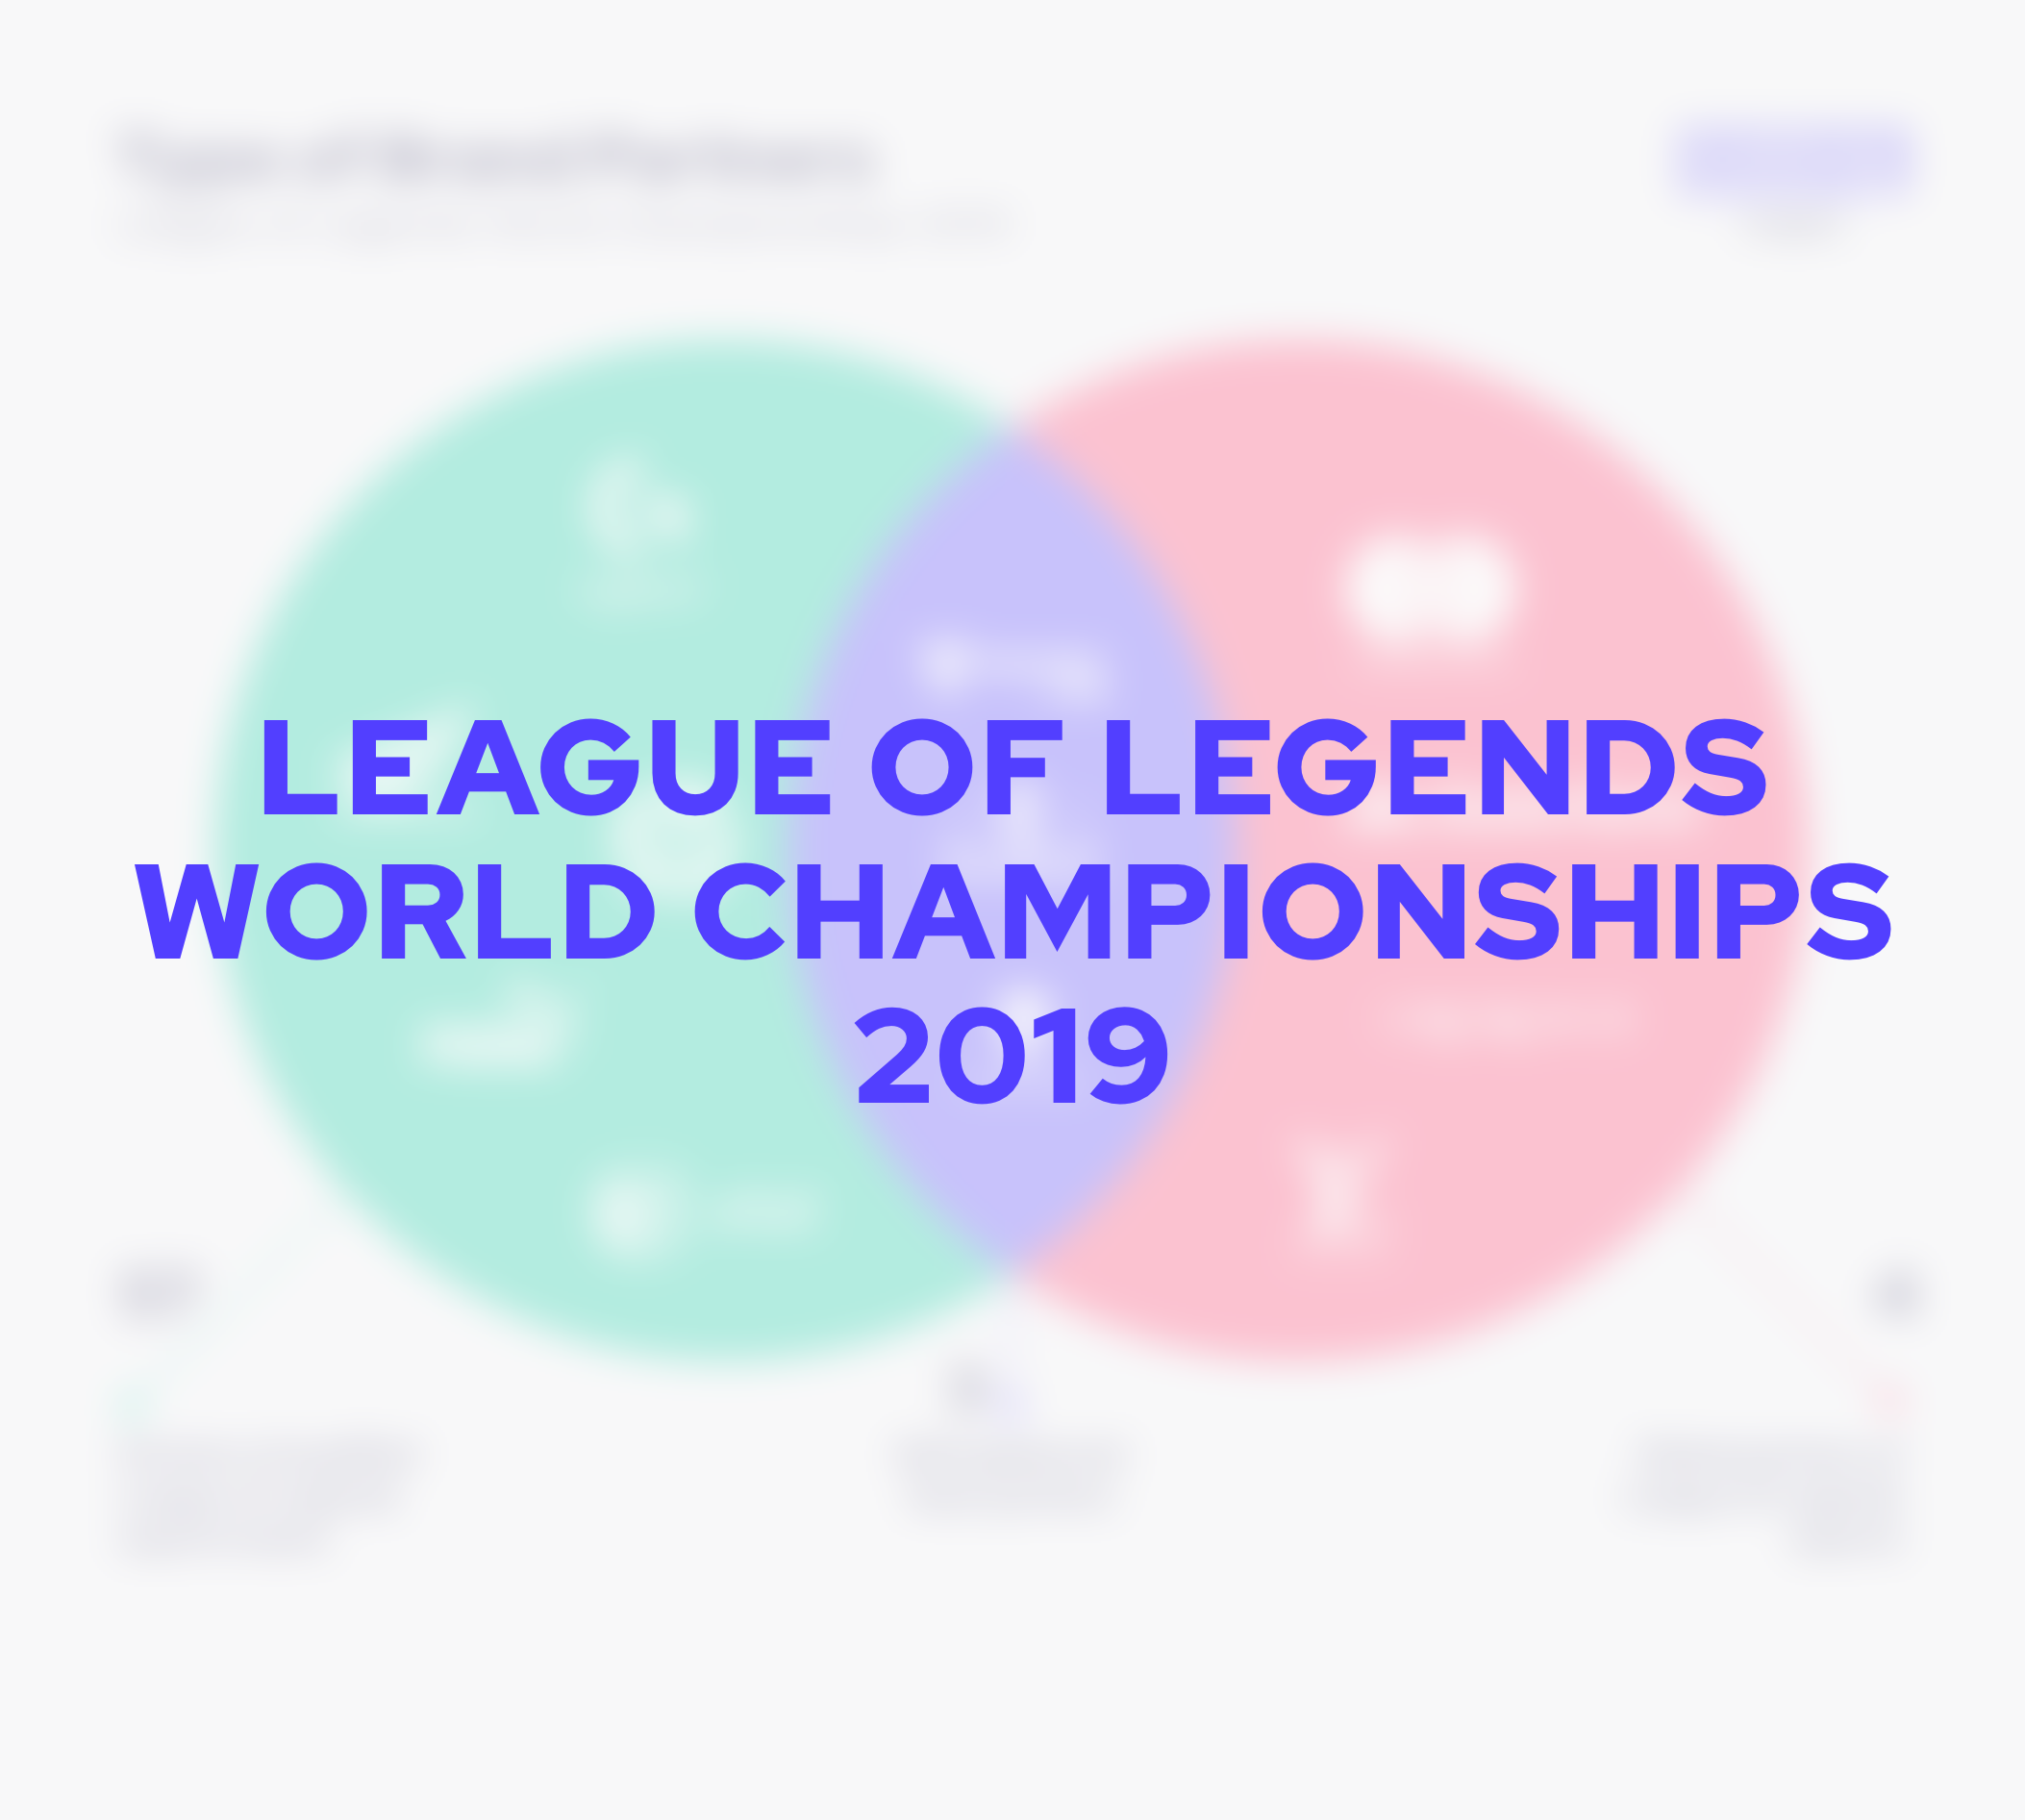 League of Legends World Championship 2019 Partnerships